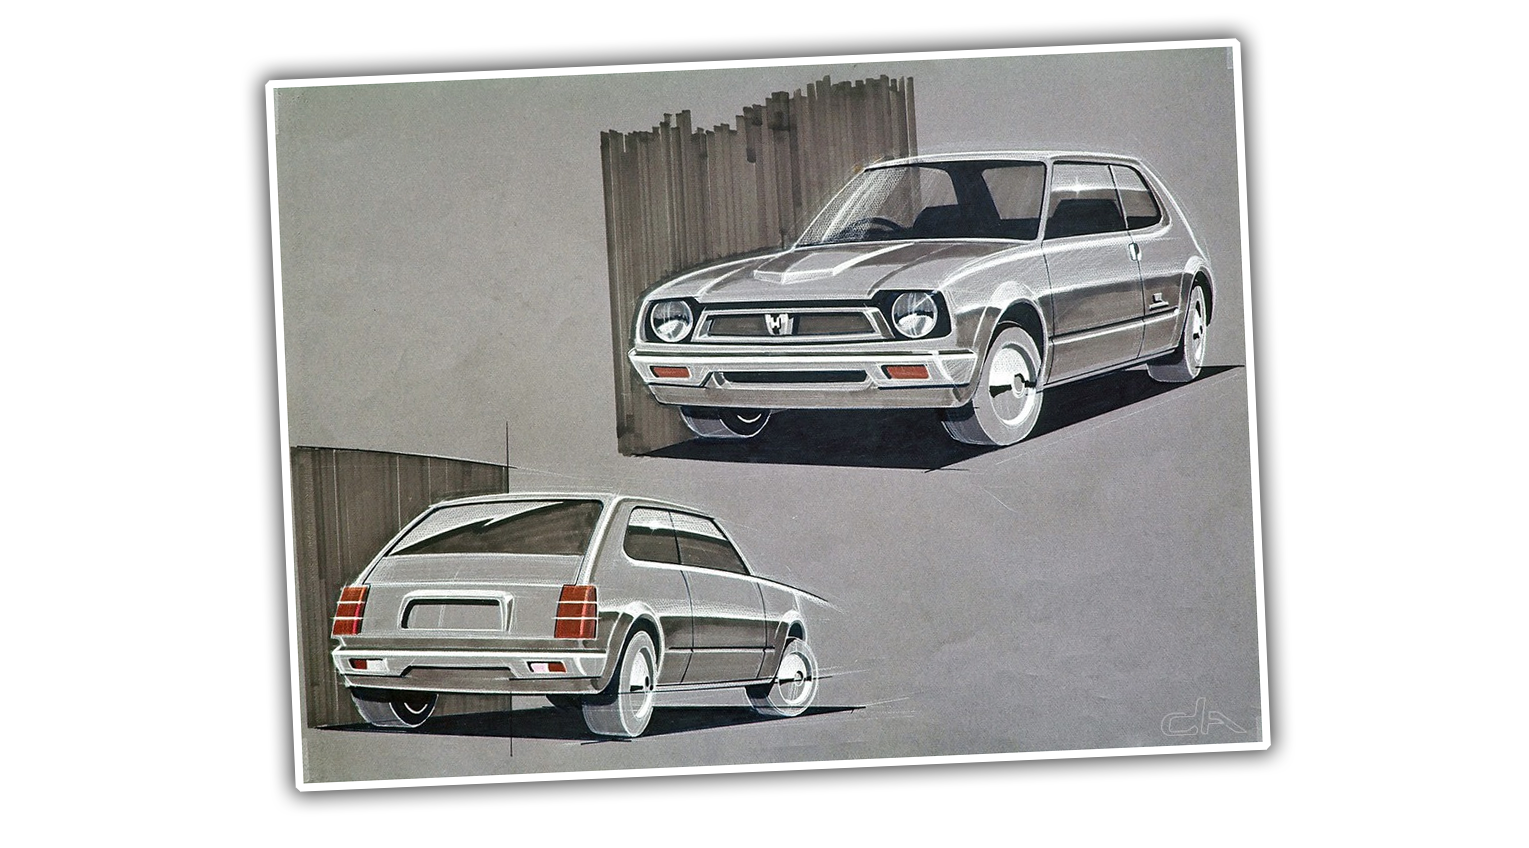 These Design Sketches For The Original Honda Civic Are Fantastic